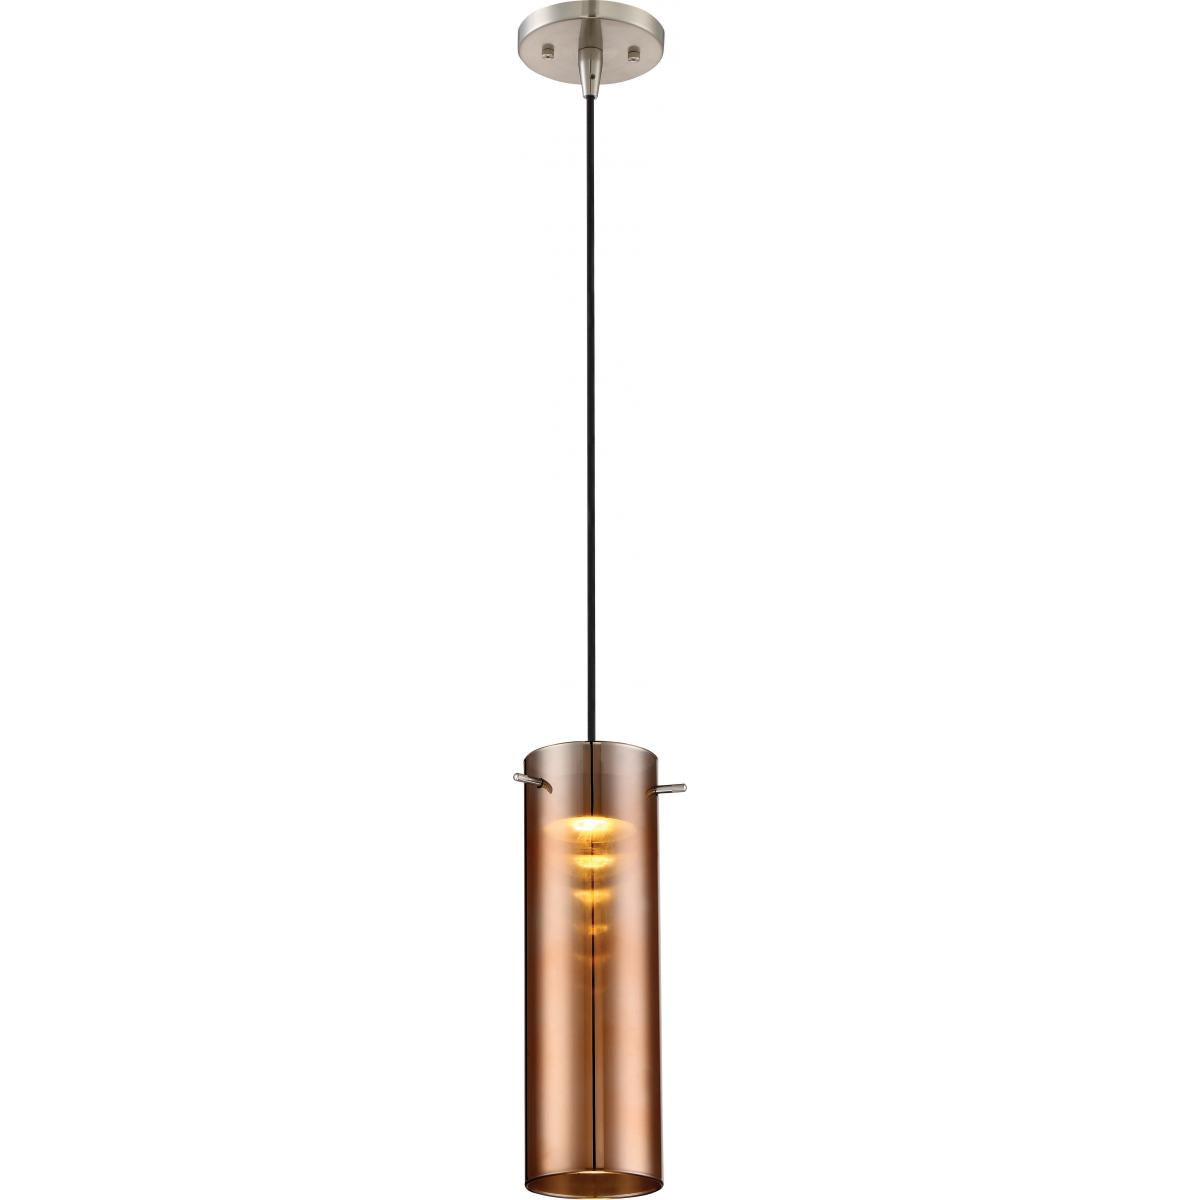 NUVO 62-955 Pulse - LED Mini Pendant with Antiqued Glass - Brushed Nickel Finish